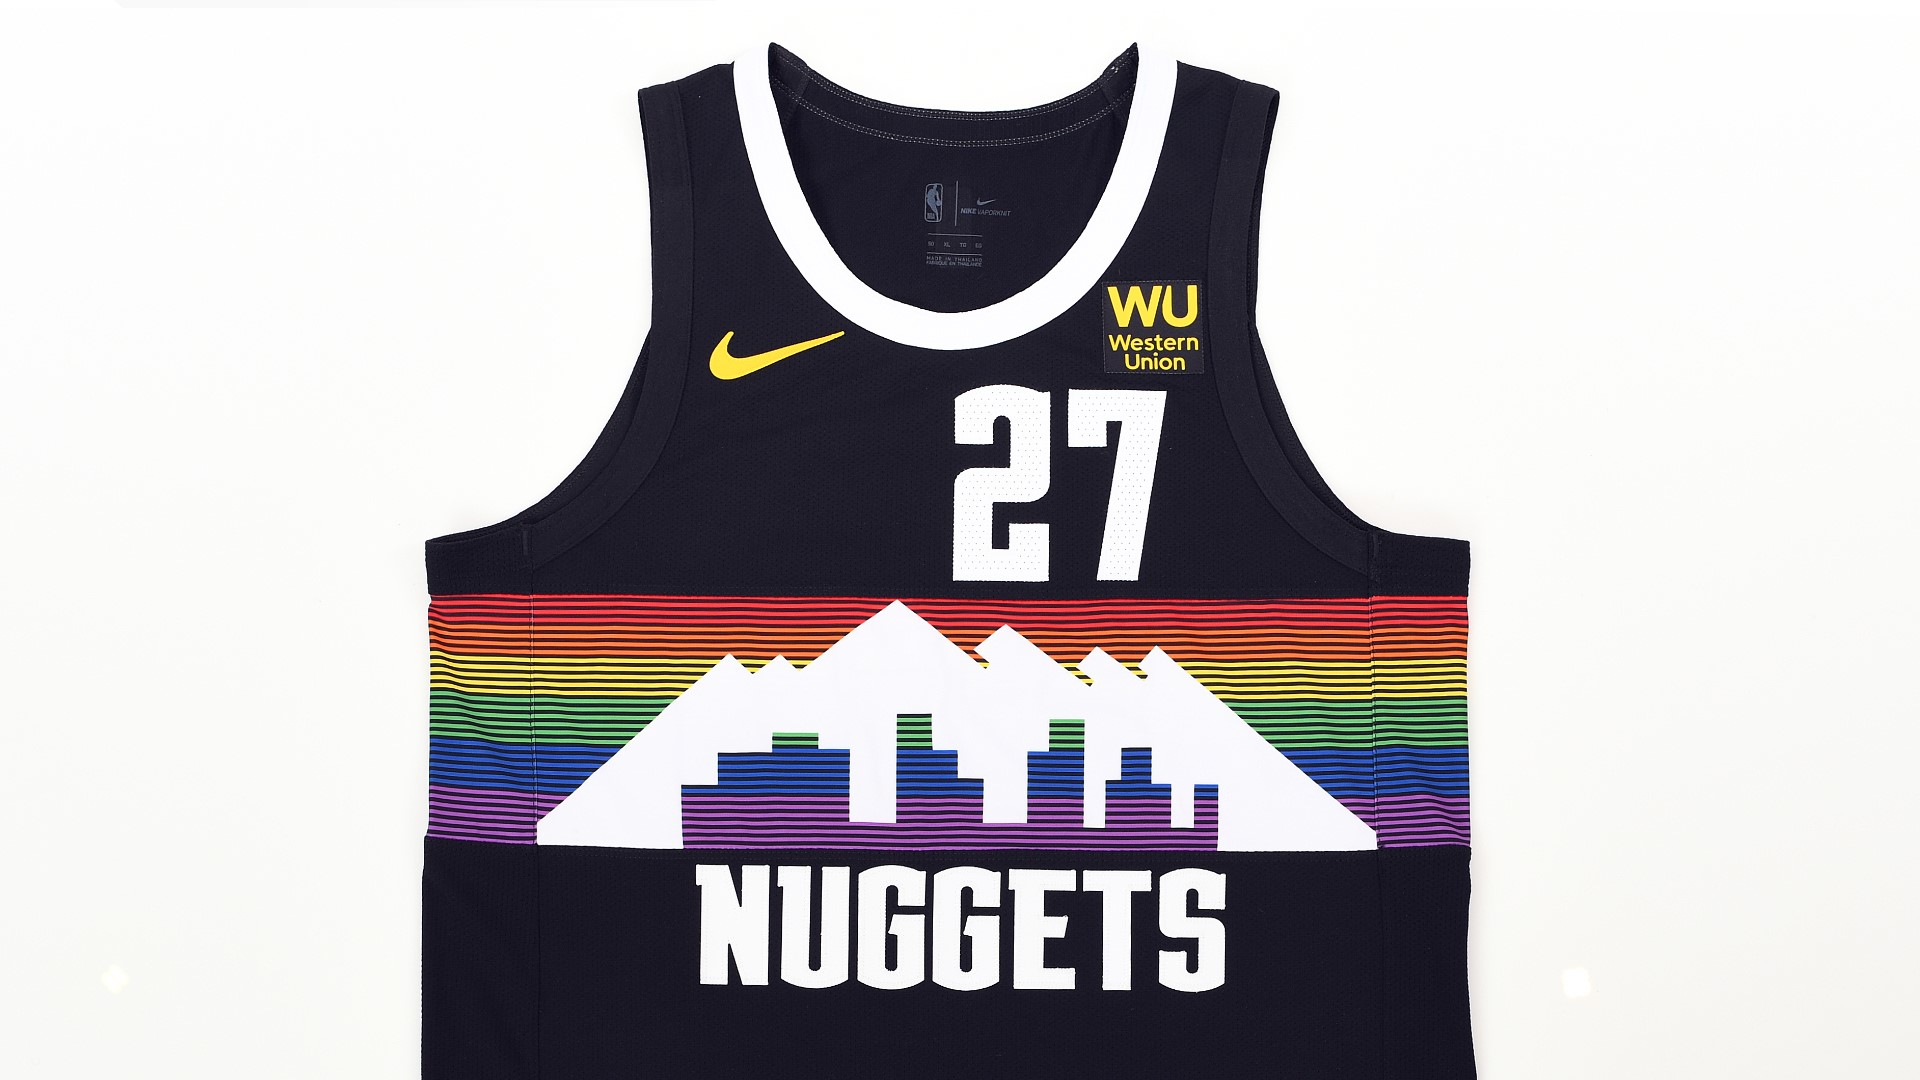 Denver Nuggets unveil new 'City Edition' rainbow skyline jersey - 9news.com